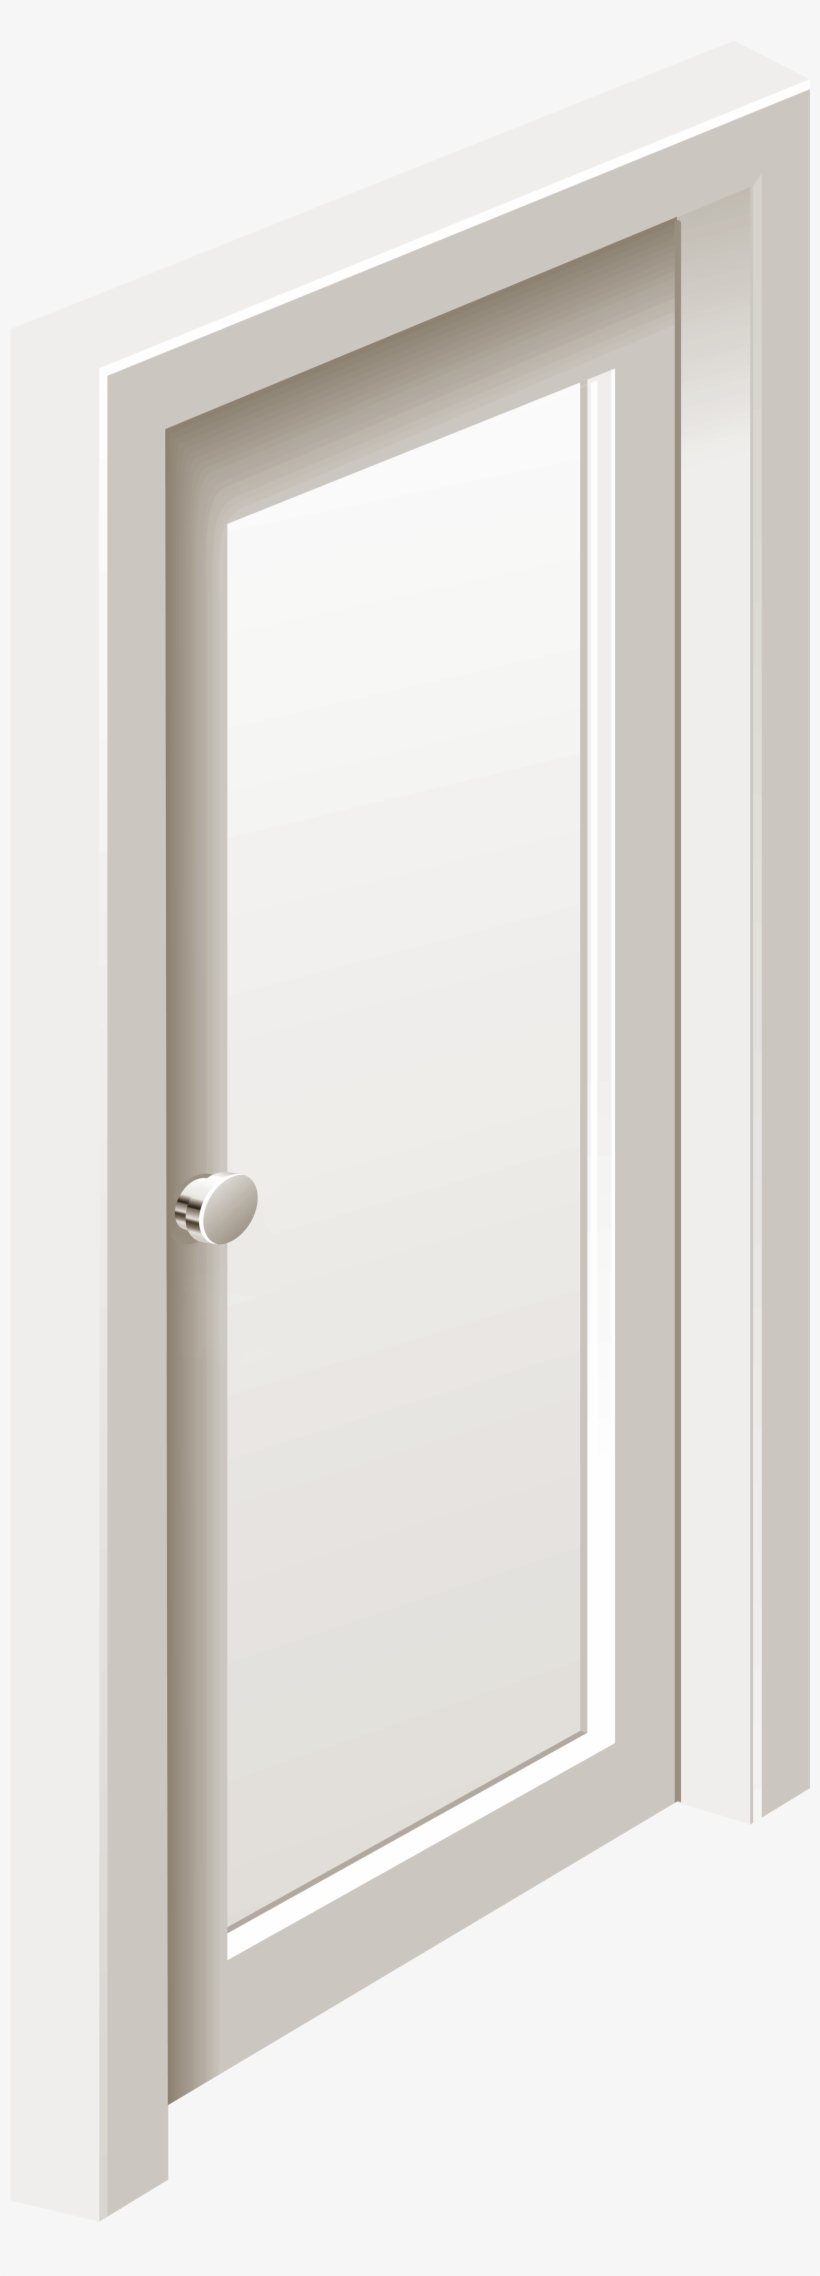 White Door Png Clip Art - Column, transparent png #9017713